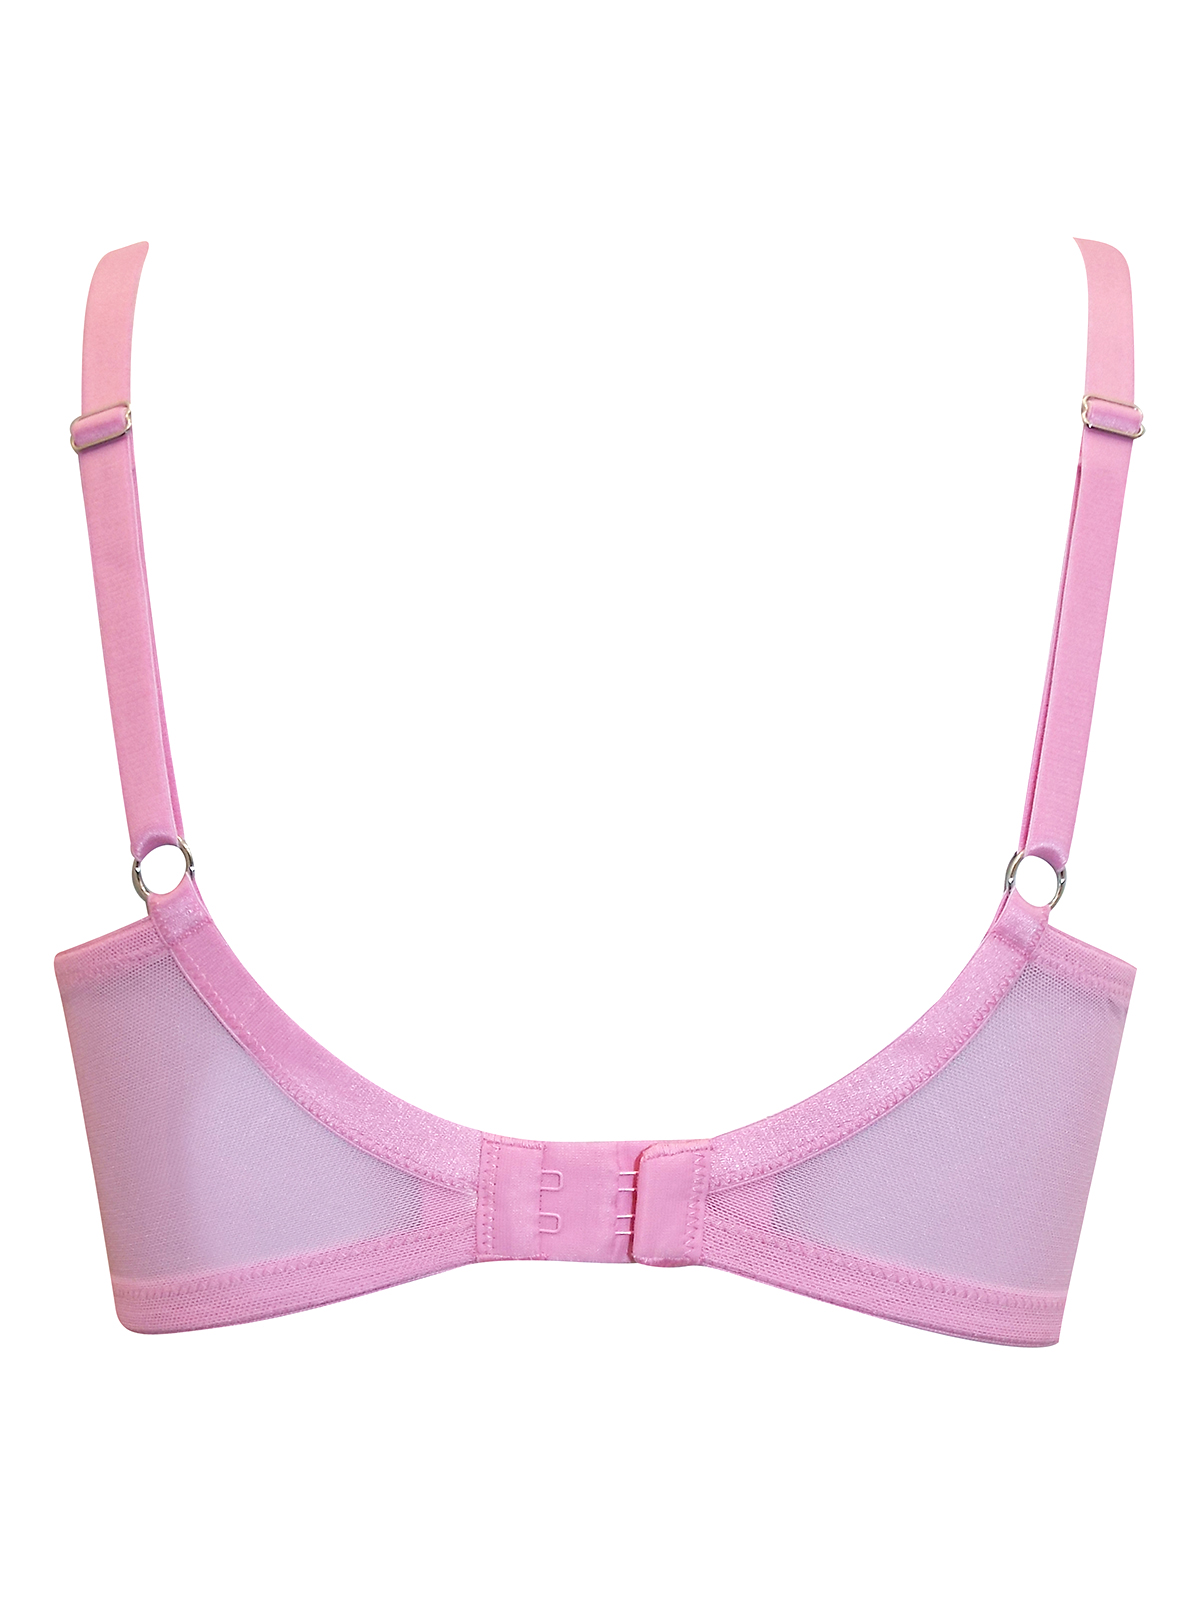 Boux Avenue Rosabella plunge bra - Neon Pink - 36B, £10.00